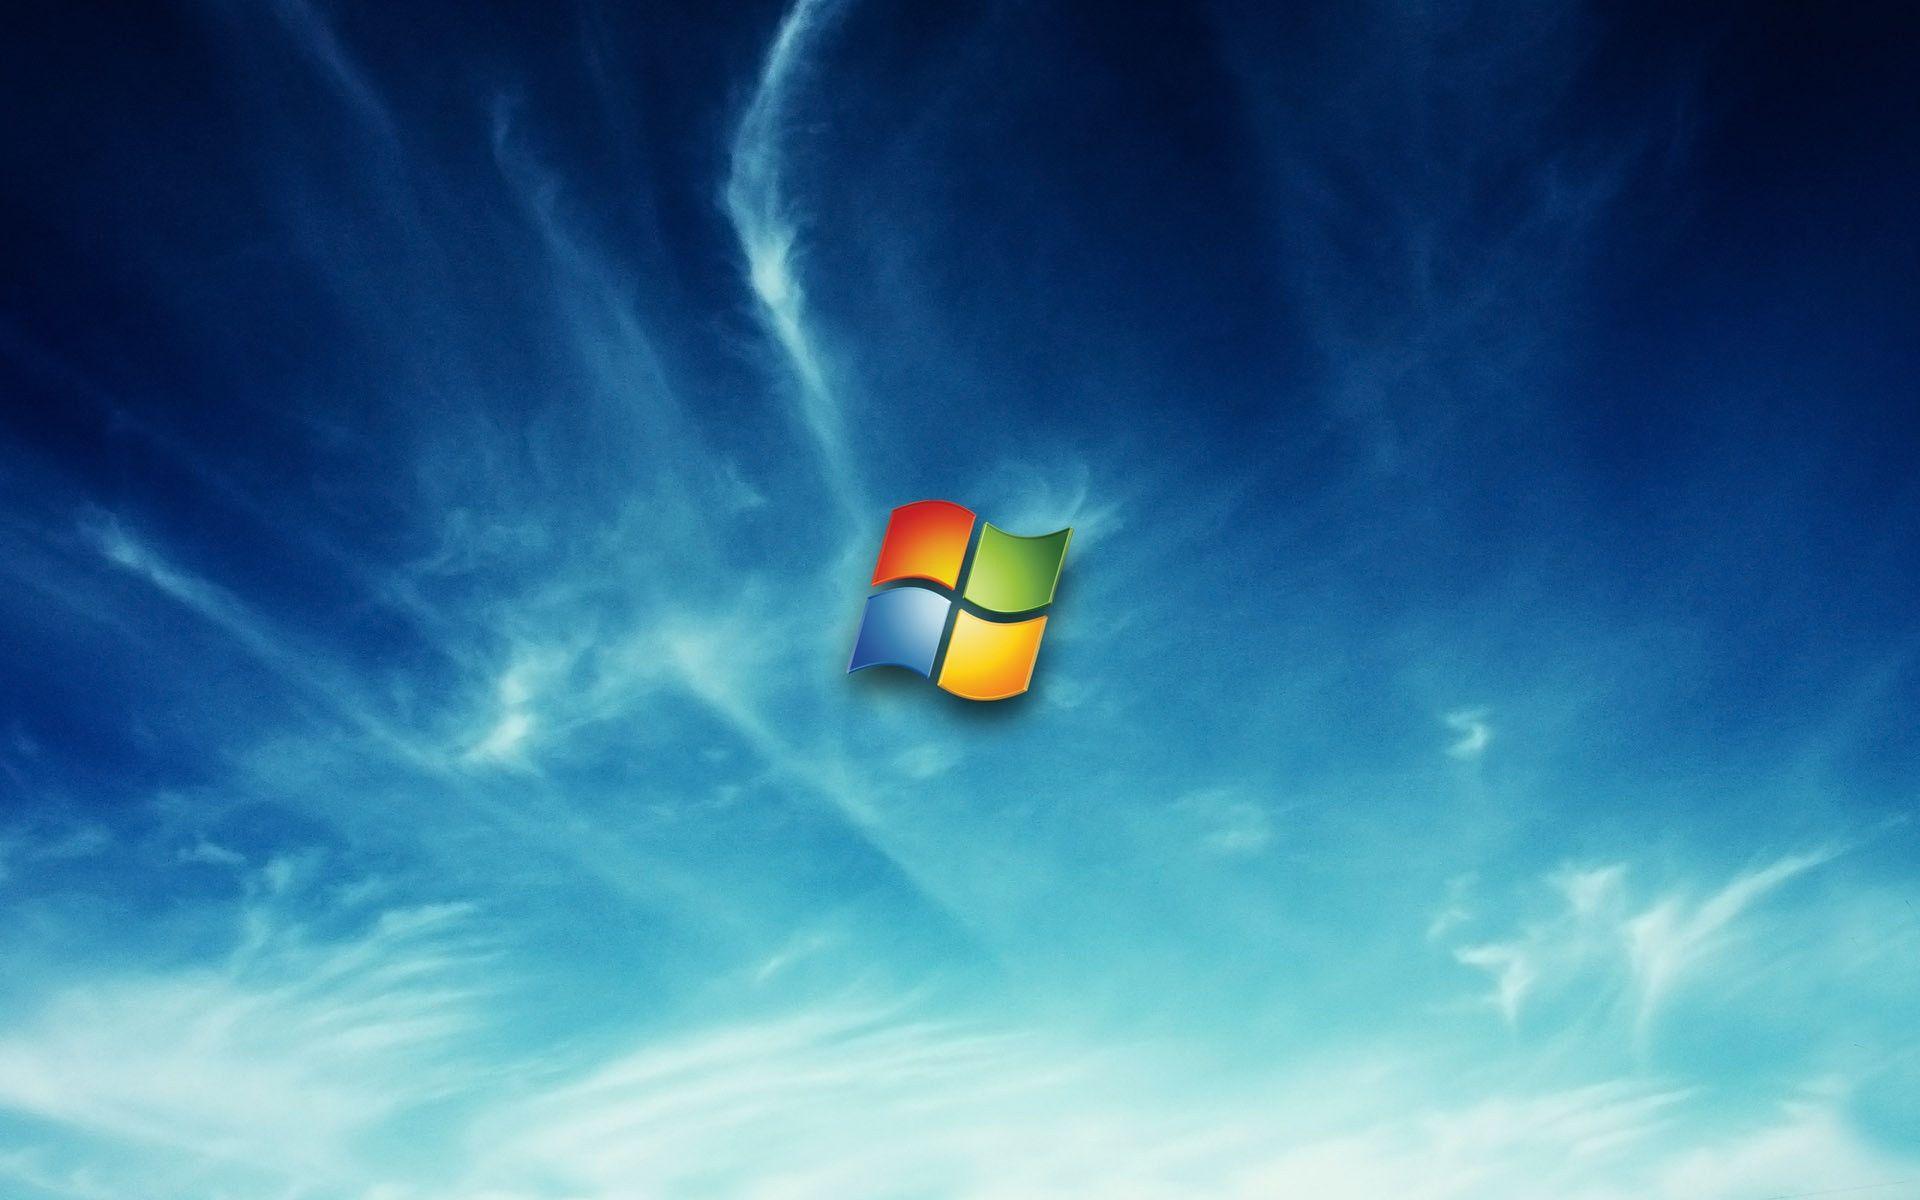 Microsoft Windows 7 Desktop Backgrounds - Wallpaper Cave